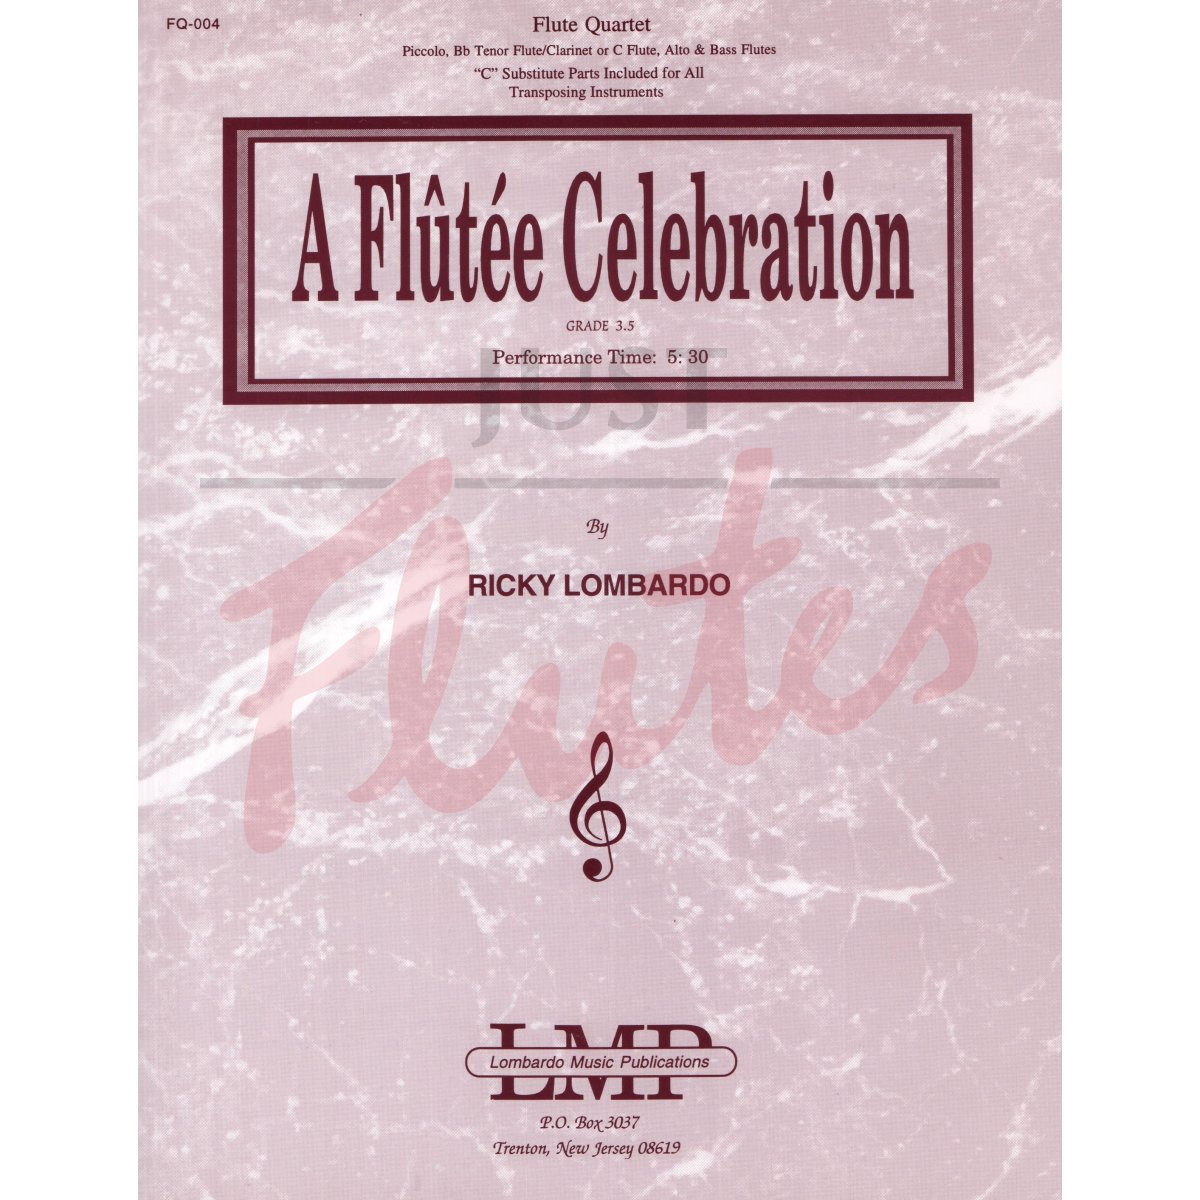 A Flûtée Celebration for Flute and Piano 